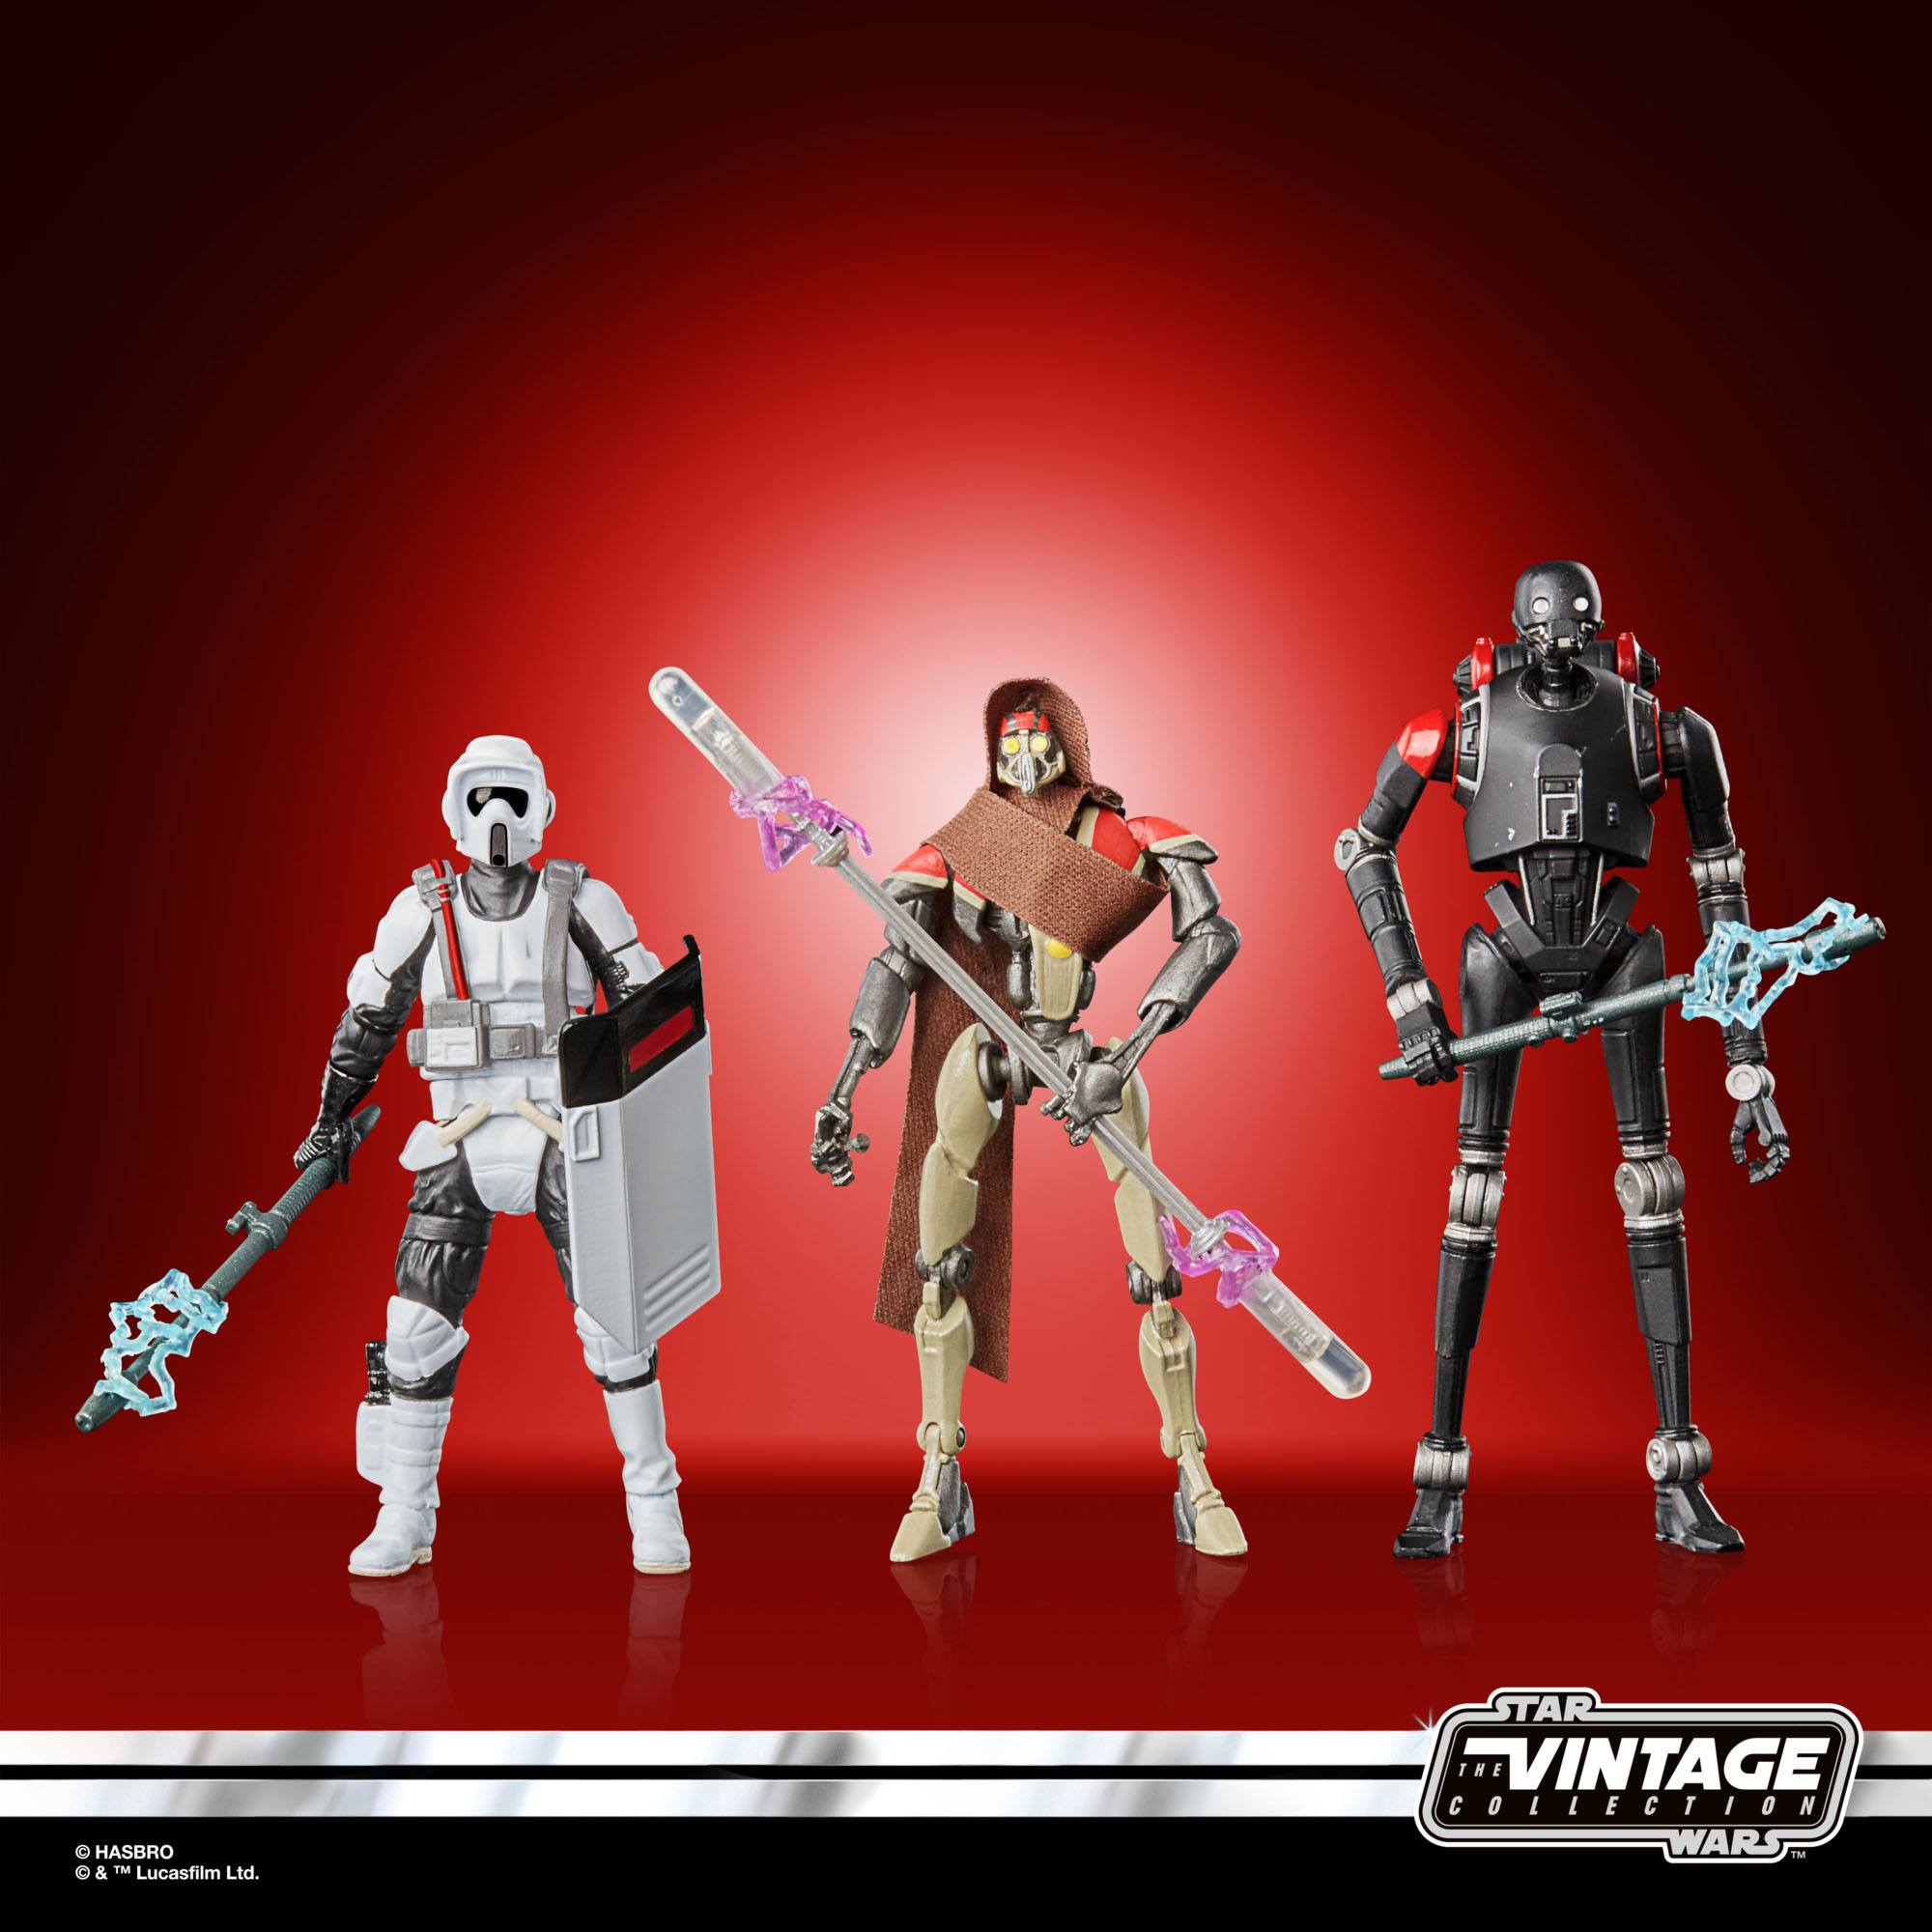 Star Wars The Vintage Collection Gaming Greats Star Wars Jedi: Survivor Multipack F55645L00 5010994144982